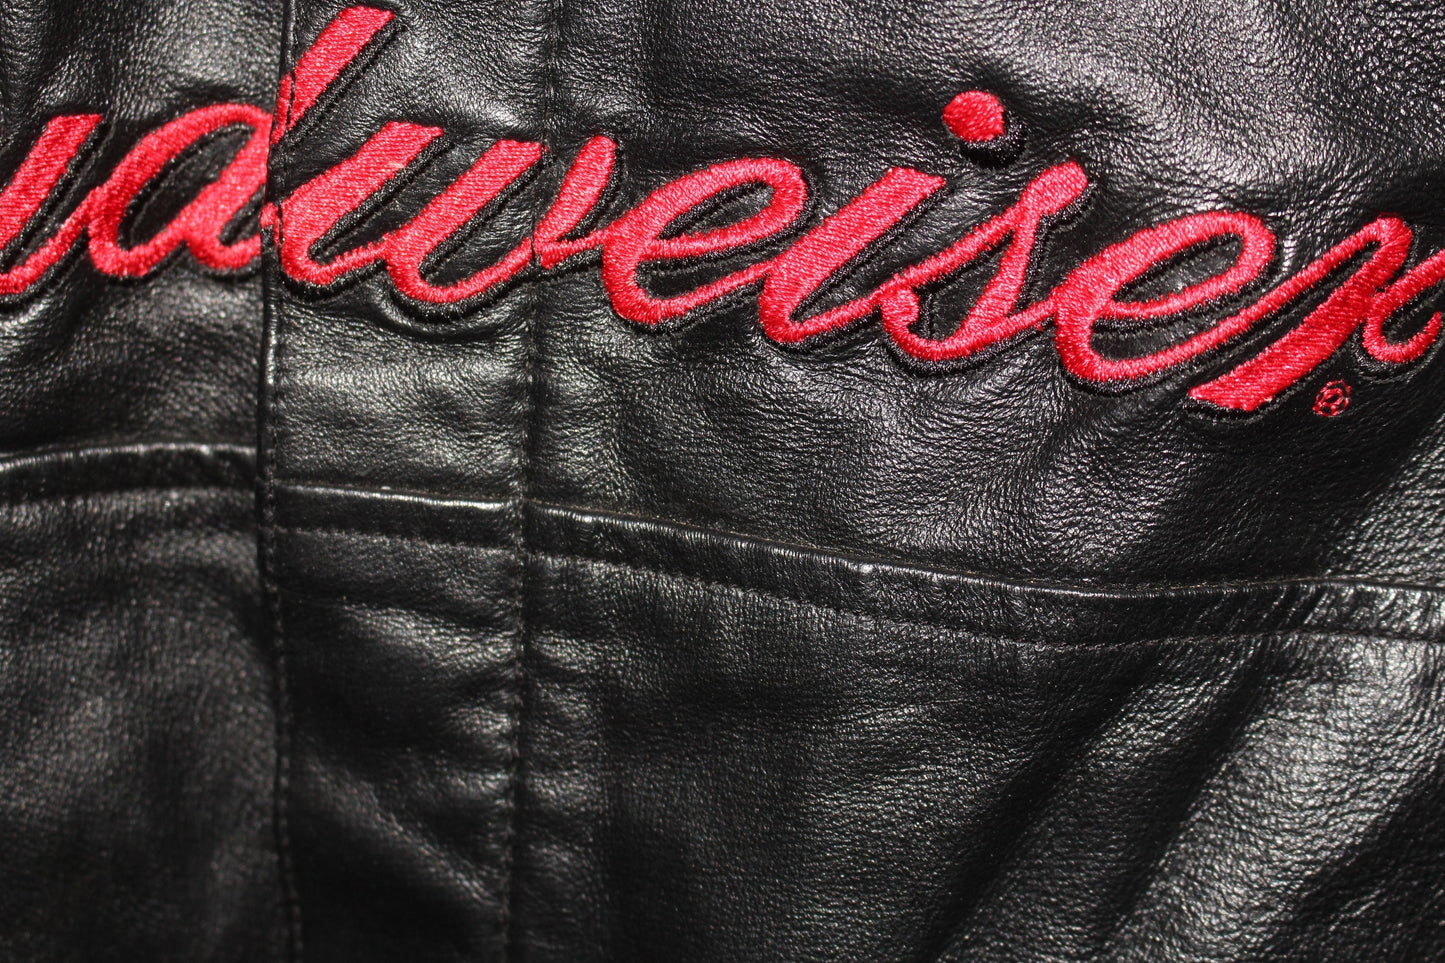 Budweiser Racing NASCAR Dale Earnhardt Jr #8 Leather Jacket (XL)